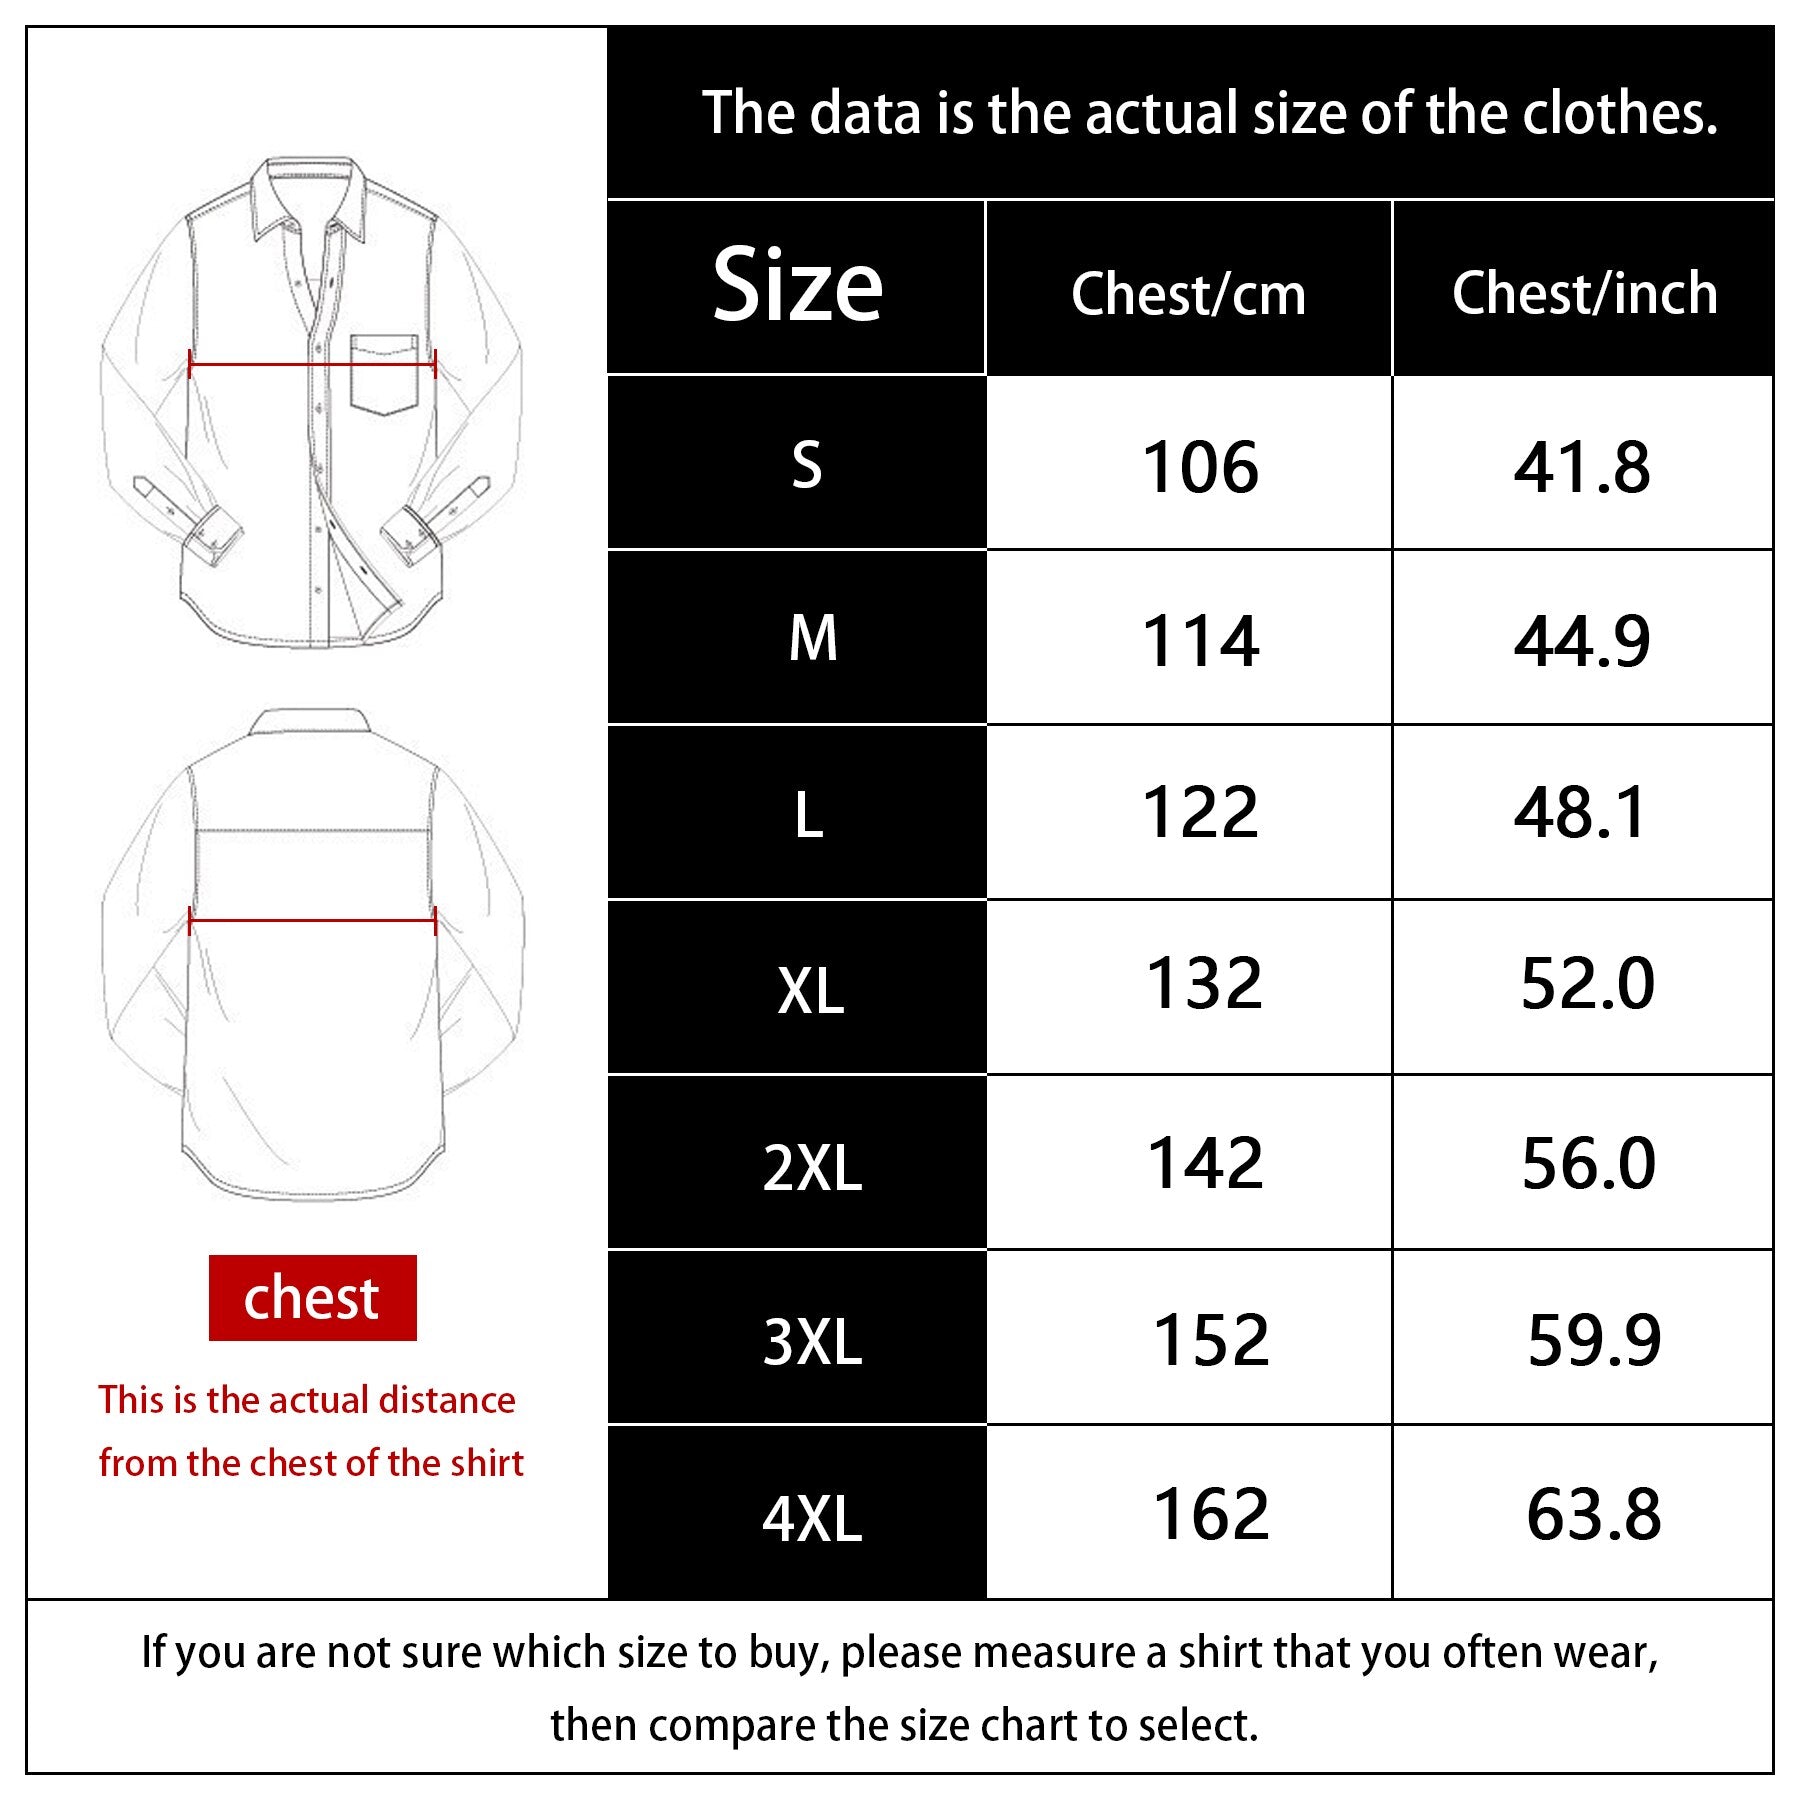 Dubinik® Mens Flannel Shirts Long Sleeve Flannel Shirt for Men Casual Button Down Brushed 100% Cotton Shirt#1508